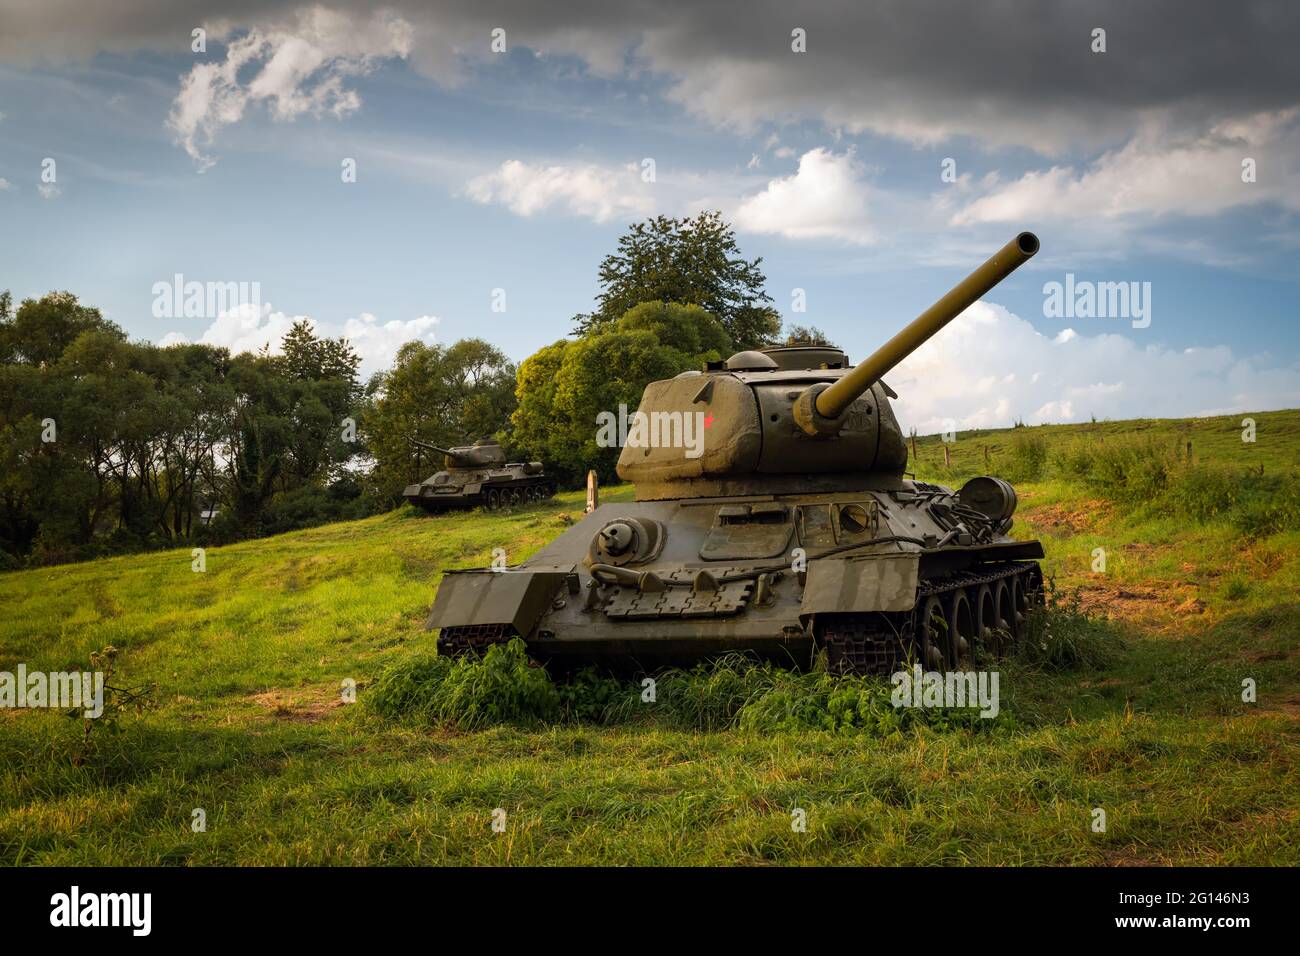 Soviet medium tank T-34 85 in the Valley of Death (Udolie smrti) - WWII battle area (the Battle of the Dukla Pass). Slovakia - Svidnik region. Stock Photo